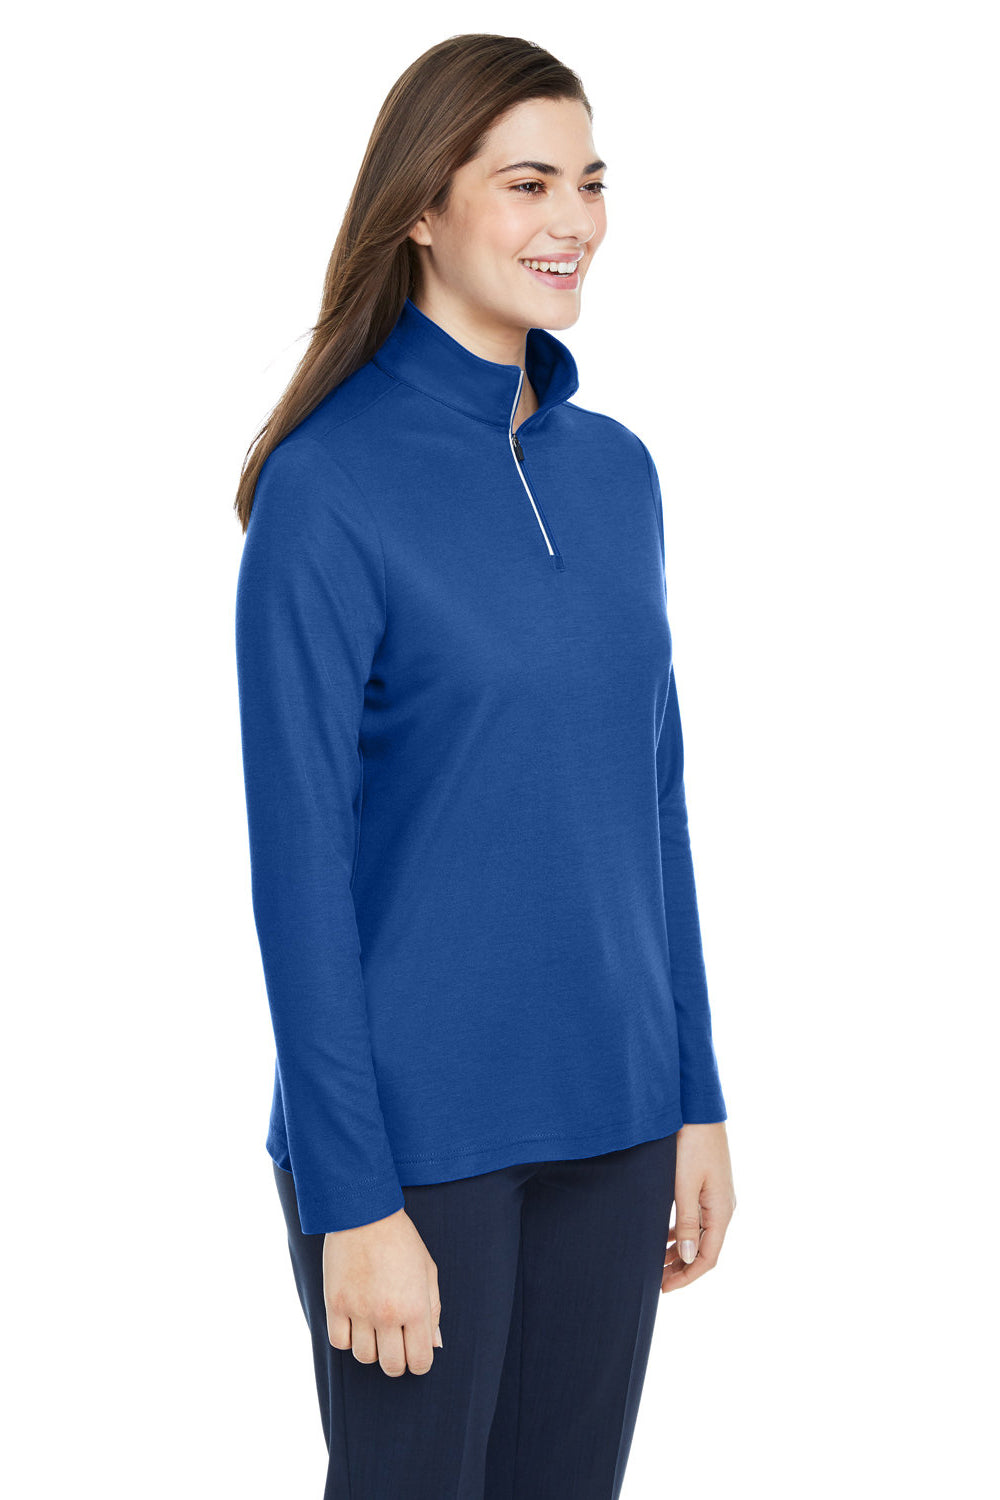 Core 365 CE405W Womens Fusion ChromaSoft Performance Moisture Wicking Pique 1/4 Zip Sweatshirt True Royal Blue 3Q